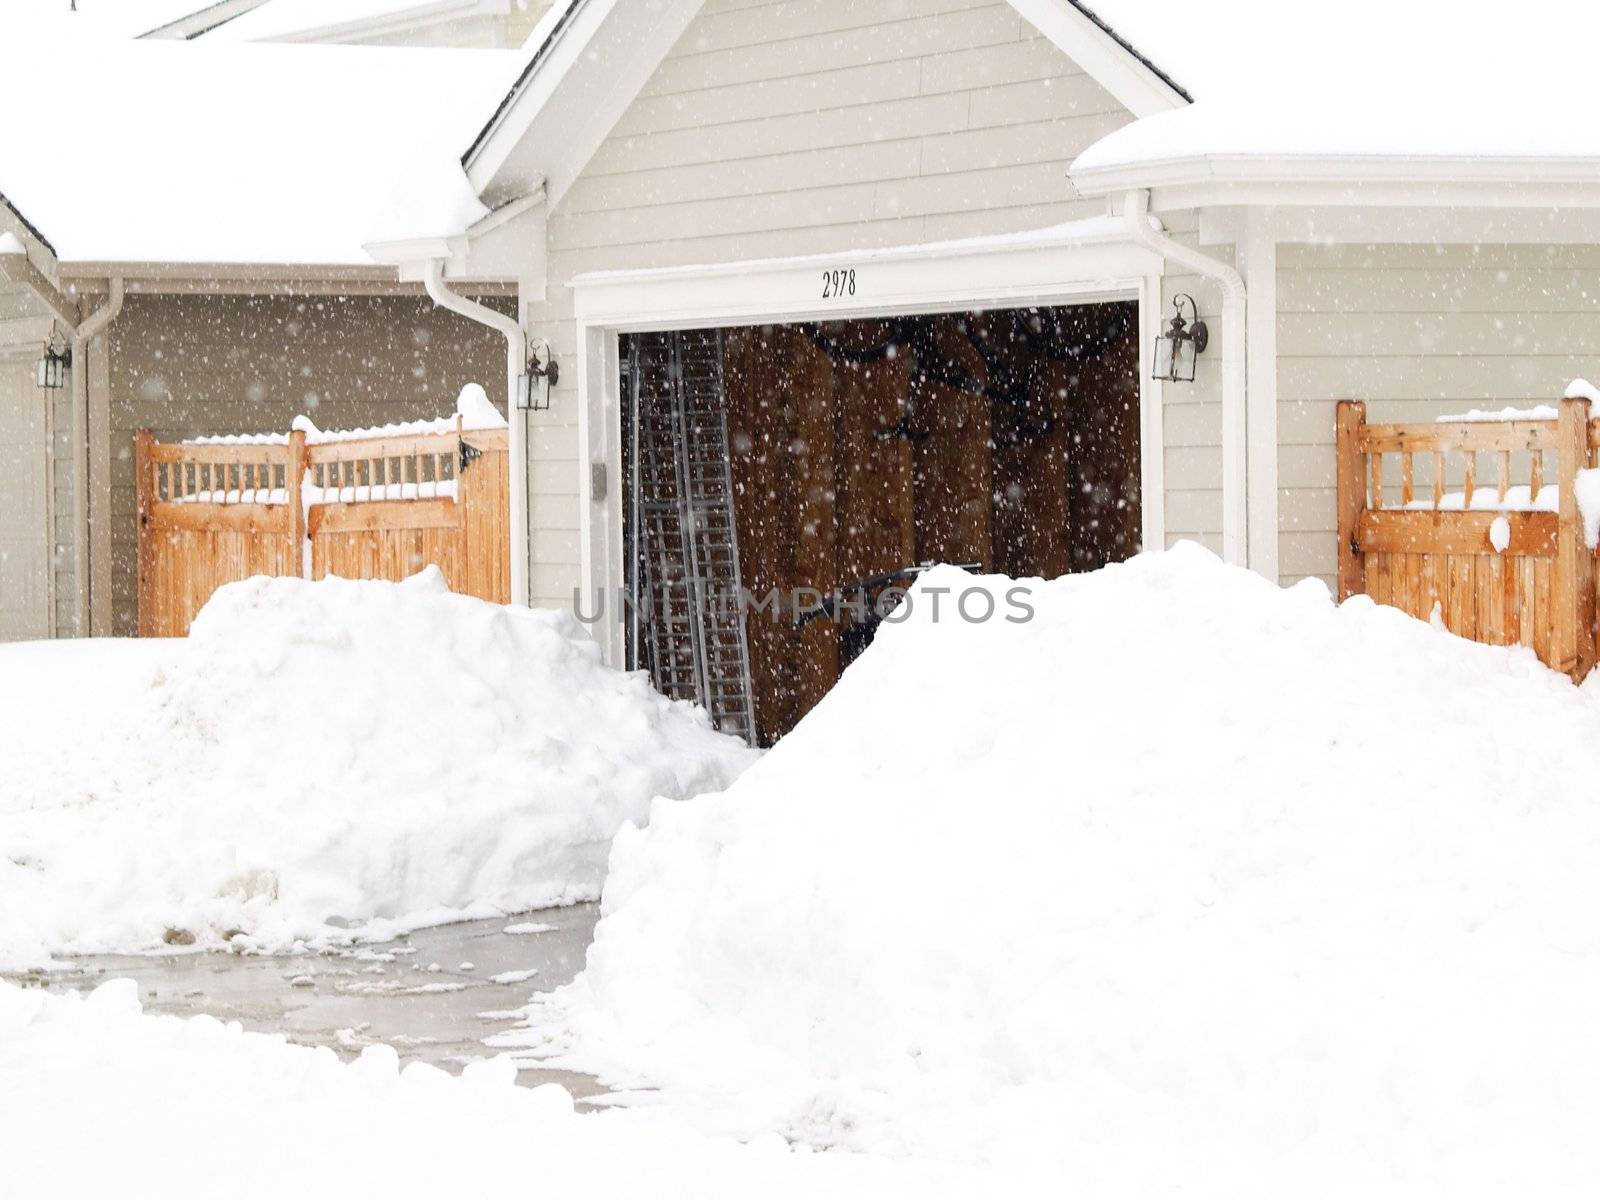 Garage i the snow by chaosmediamgt